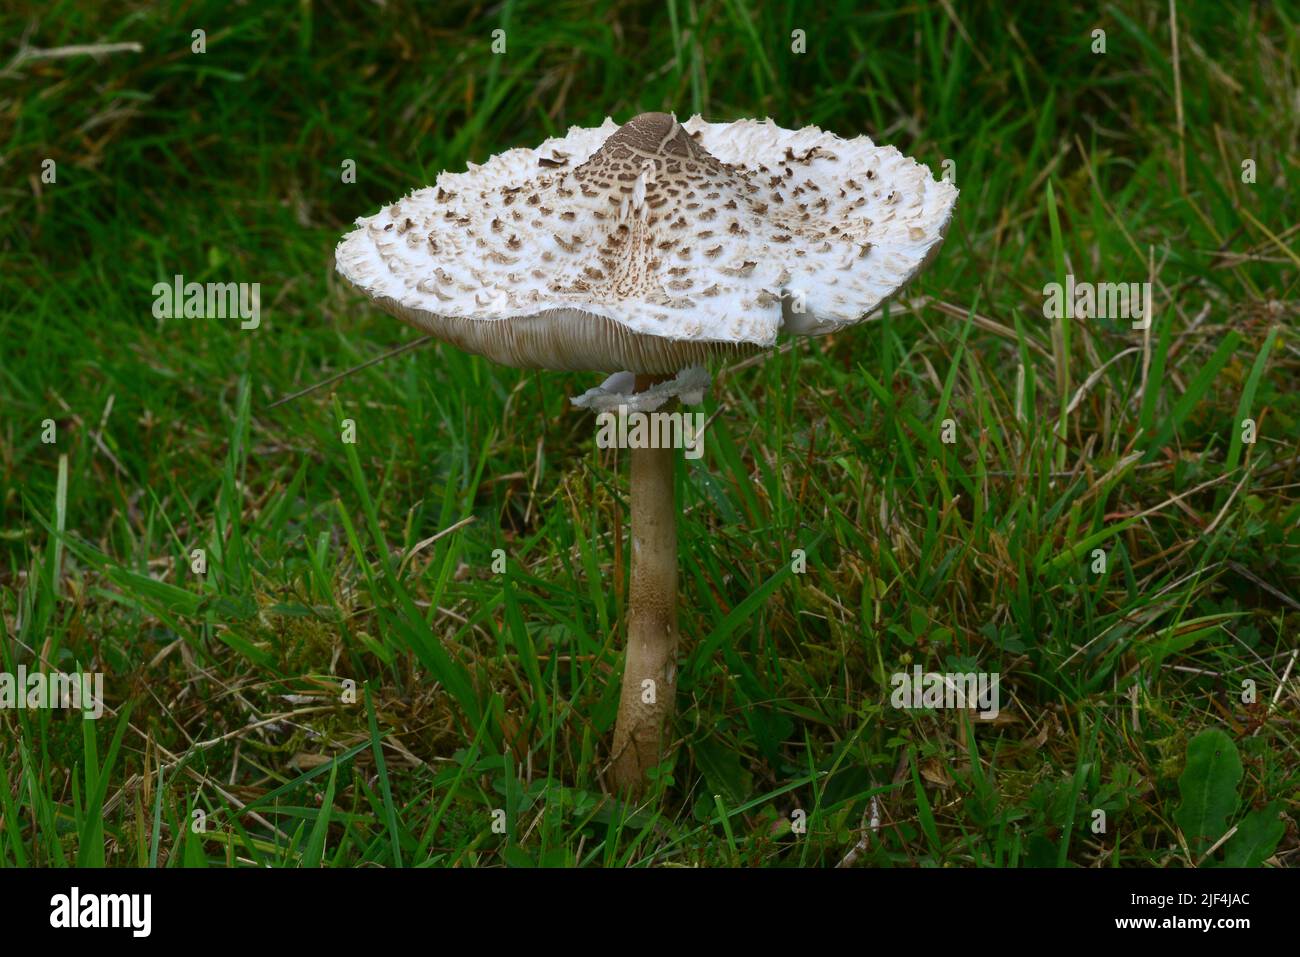 Parasol toadstool fungi fruiting body in field Stock Photo